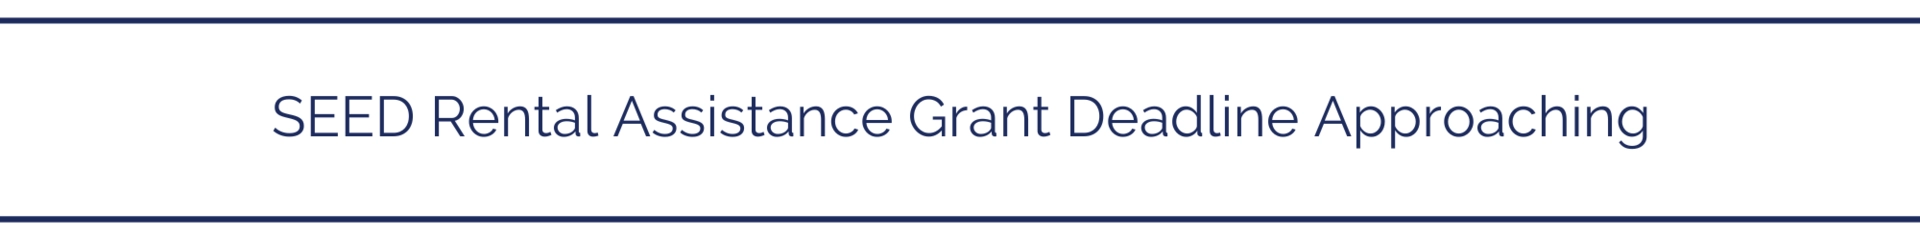 SEED Rental Assistance Grant Deadline Approaching